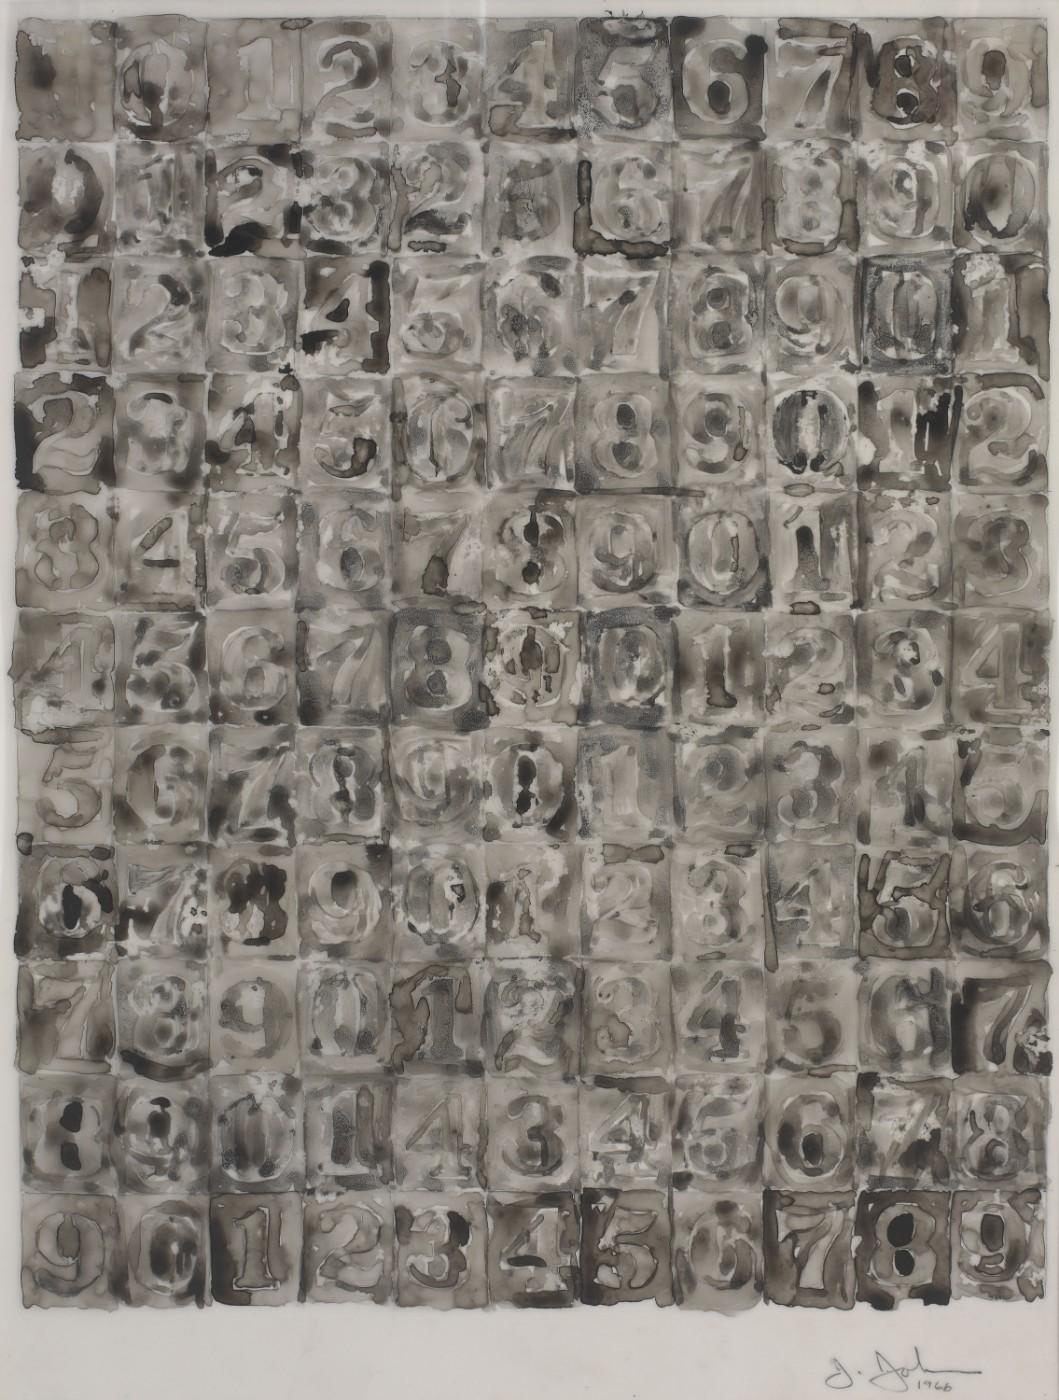 Jasper Johns, Numbers, 1966